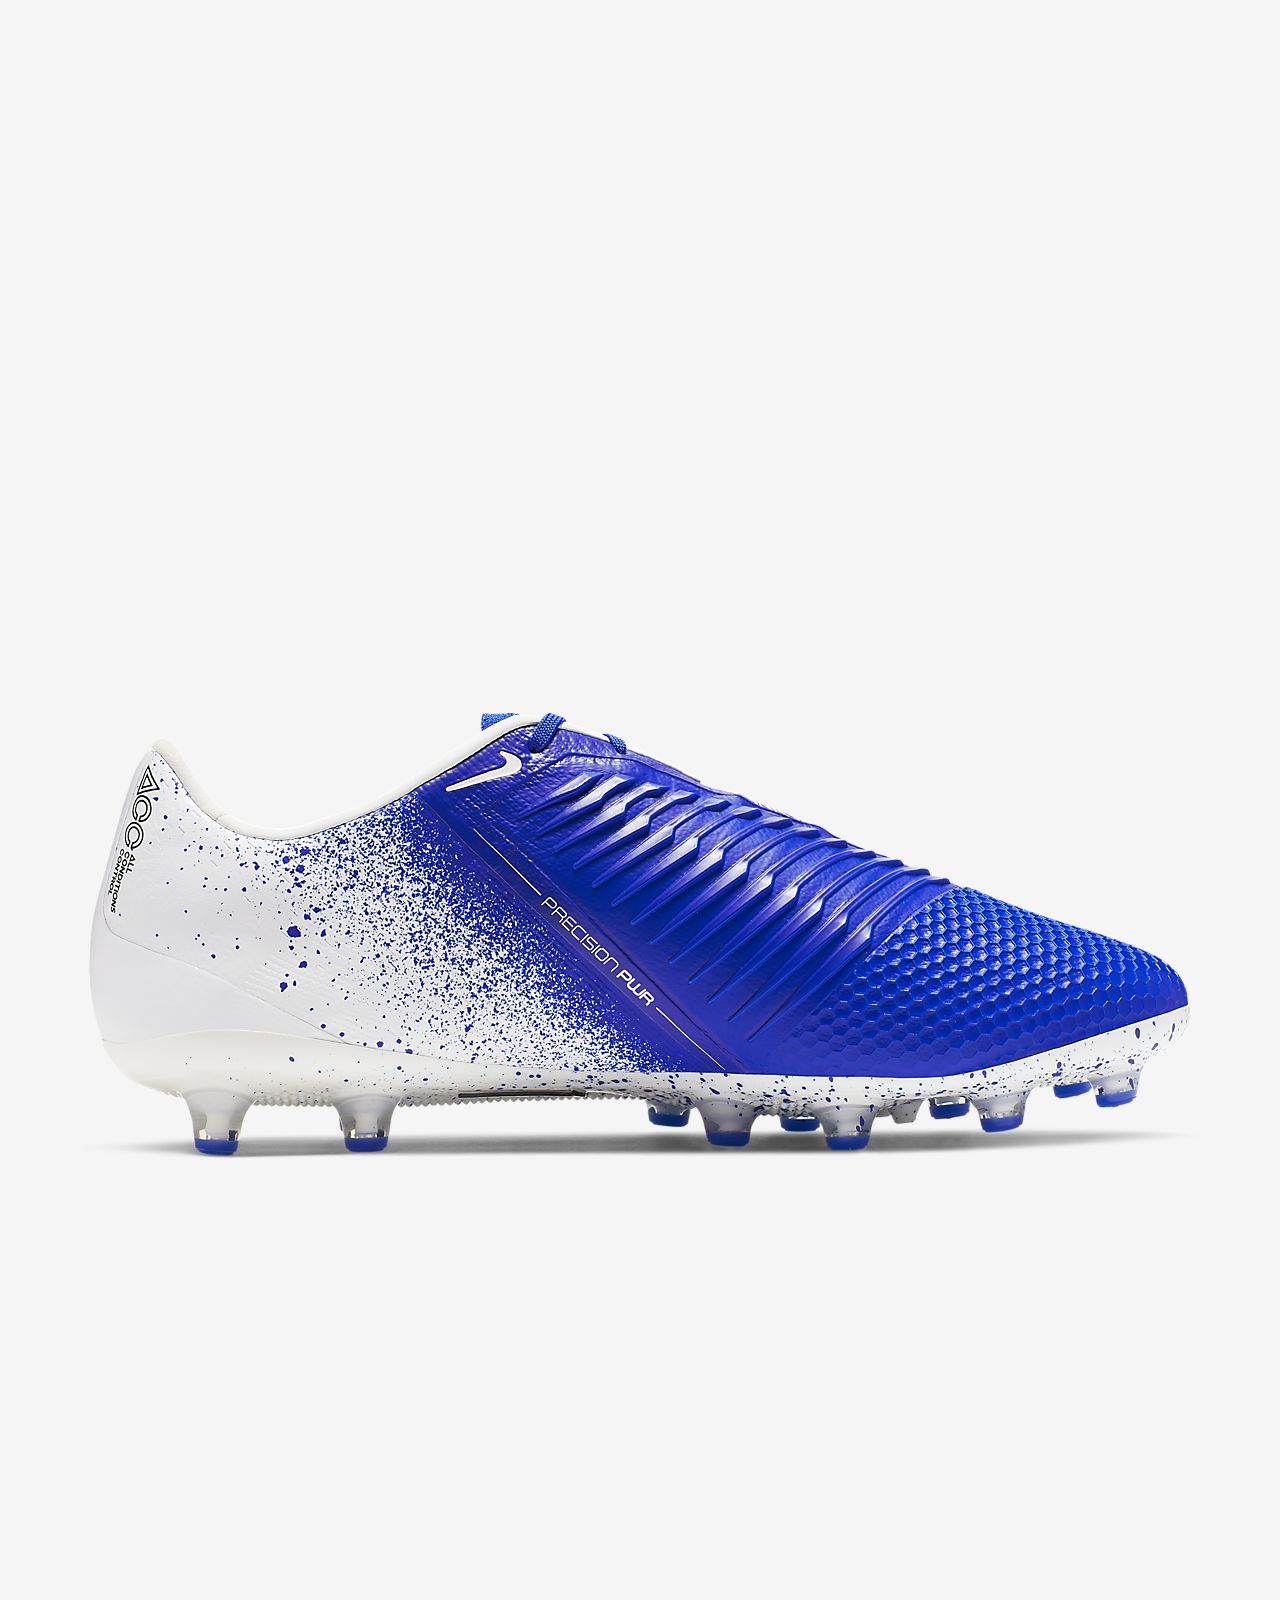 Nike Hypervenom Phantom 3 Football Boots, Soccer Cleats